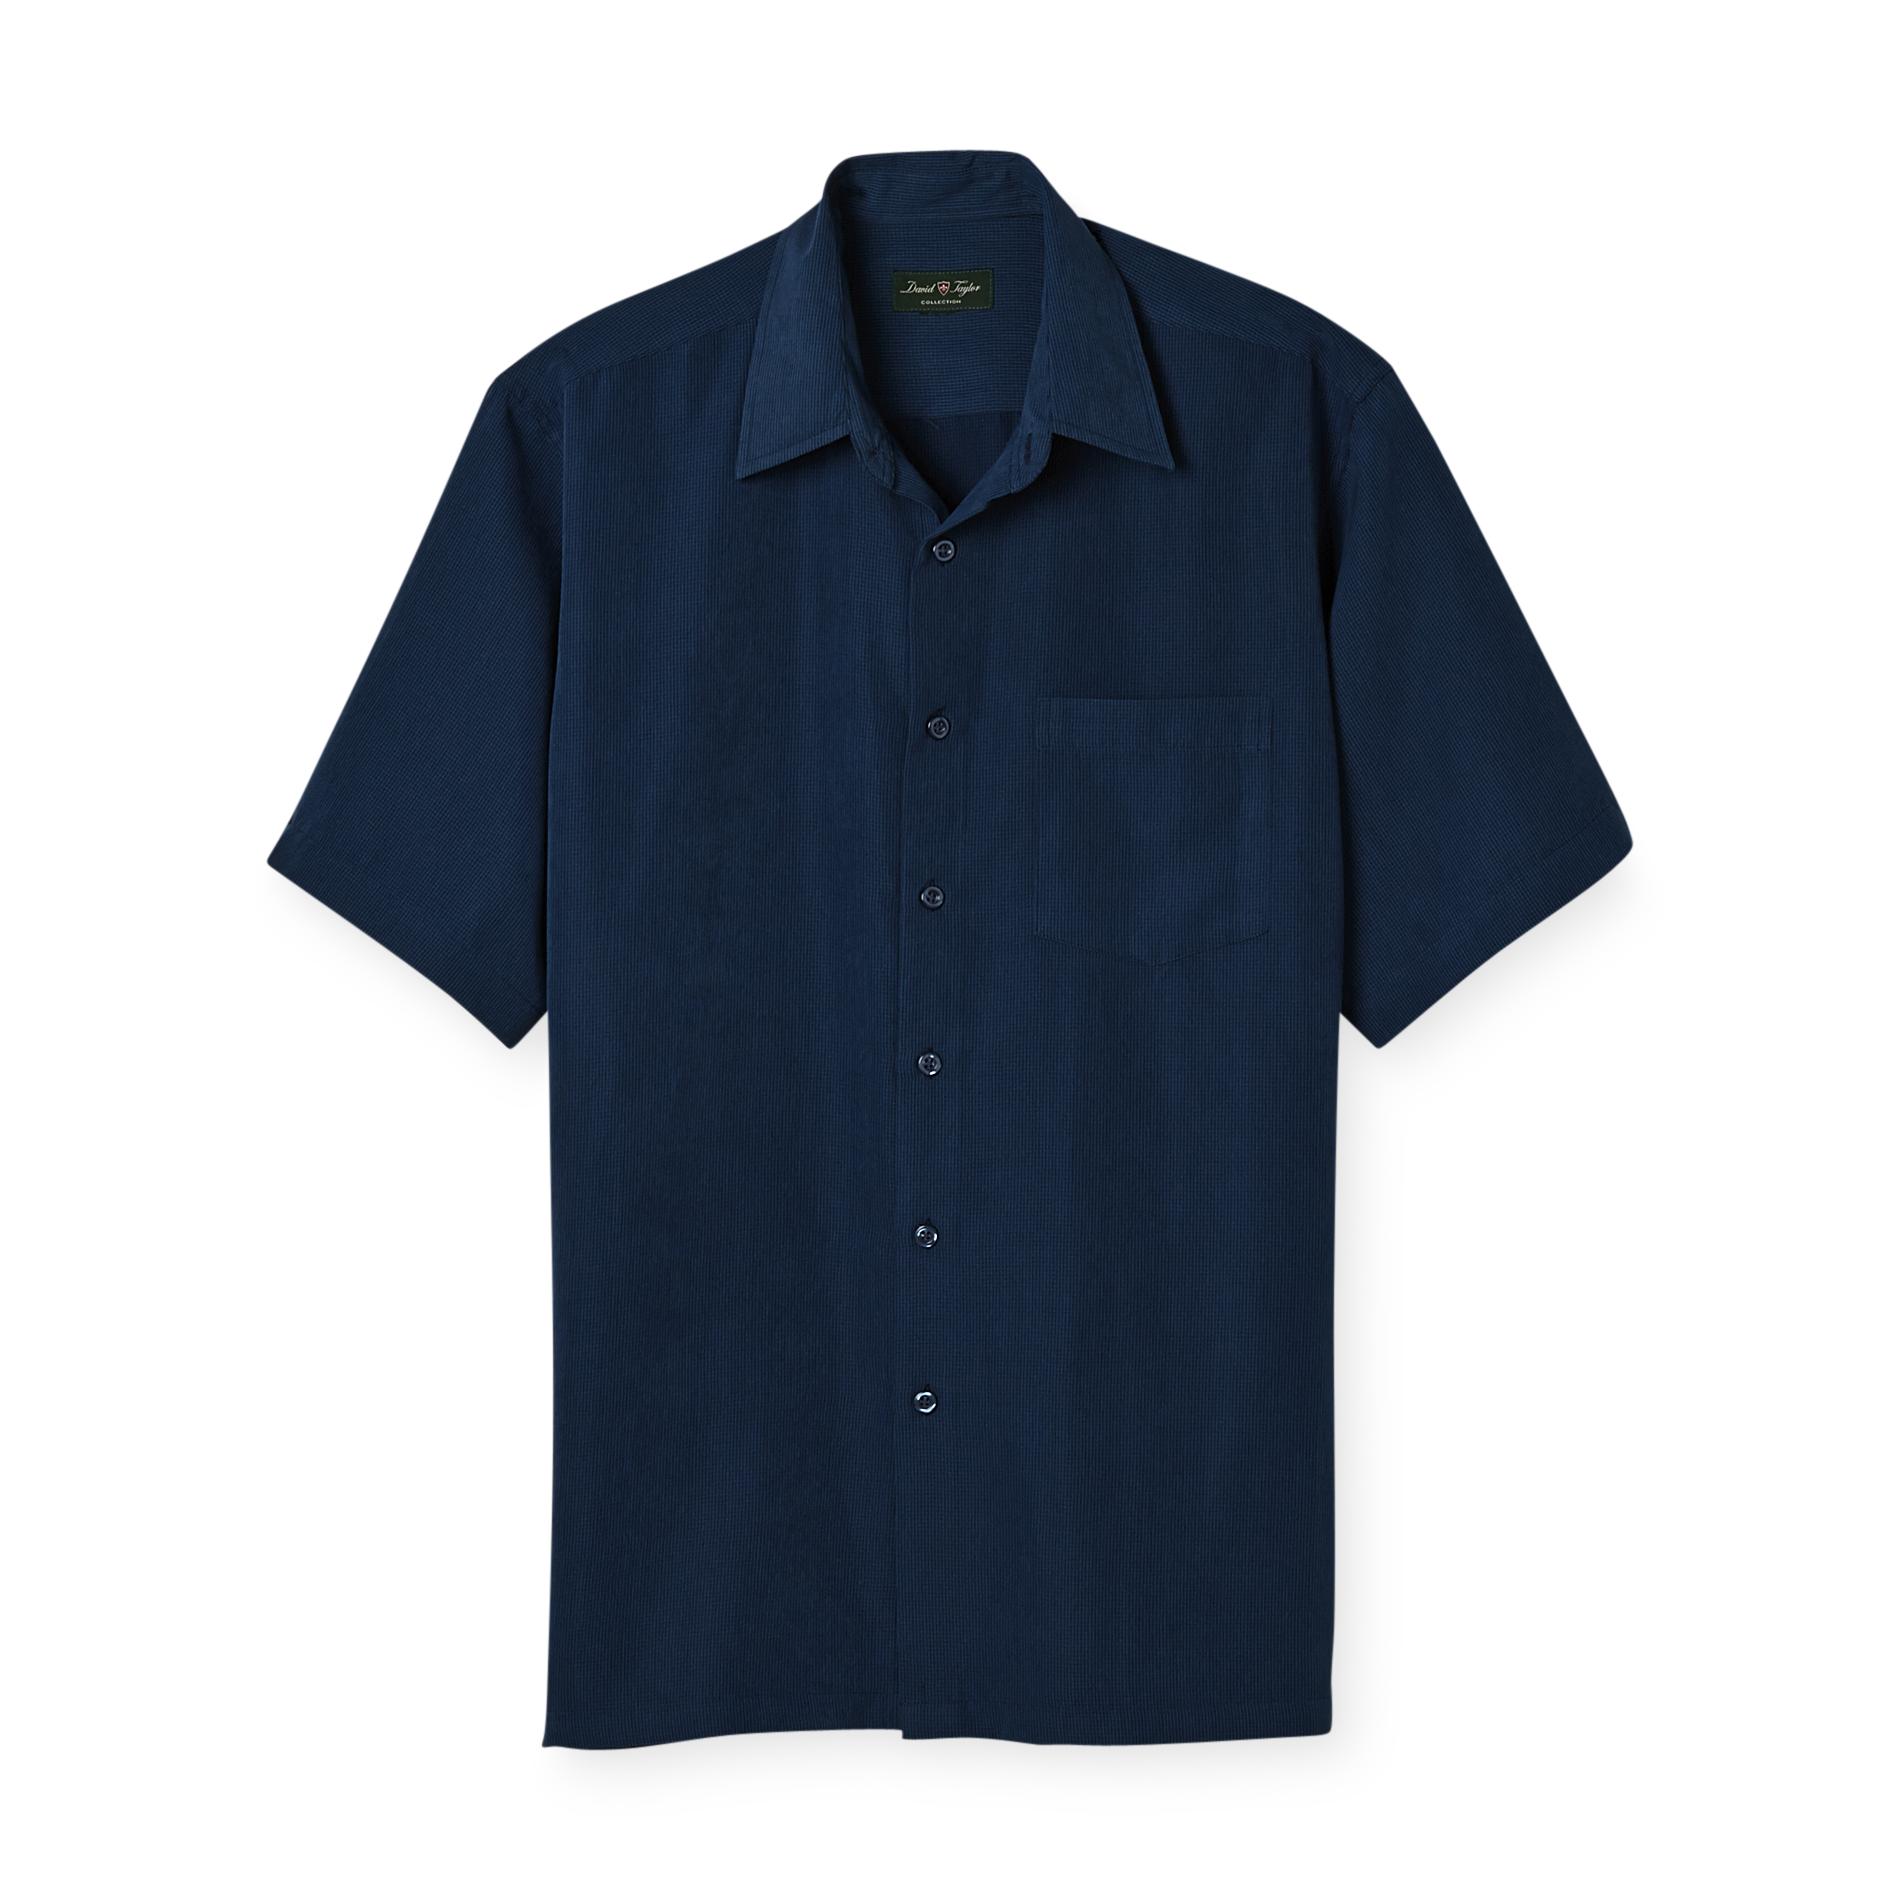 David Taylor Collection Men's Short Sleeve Shirt - Pinstriped Microfiber